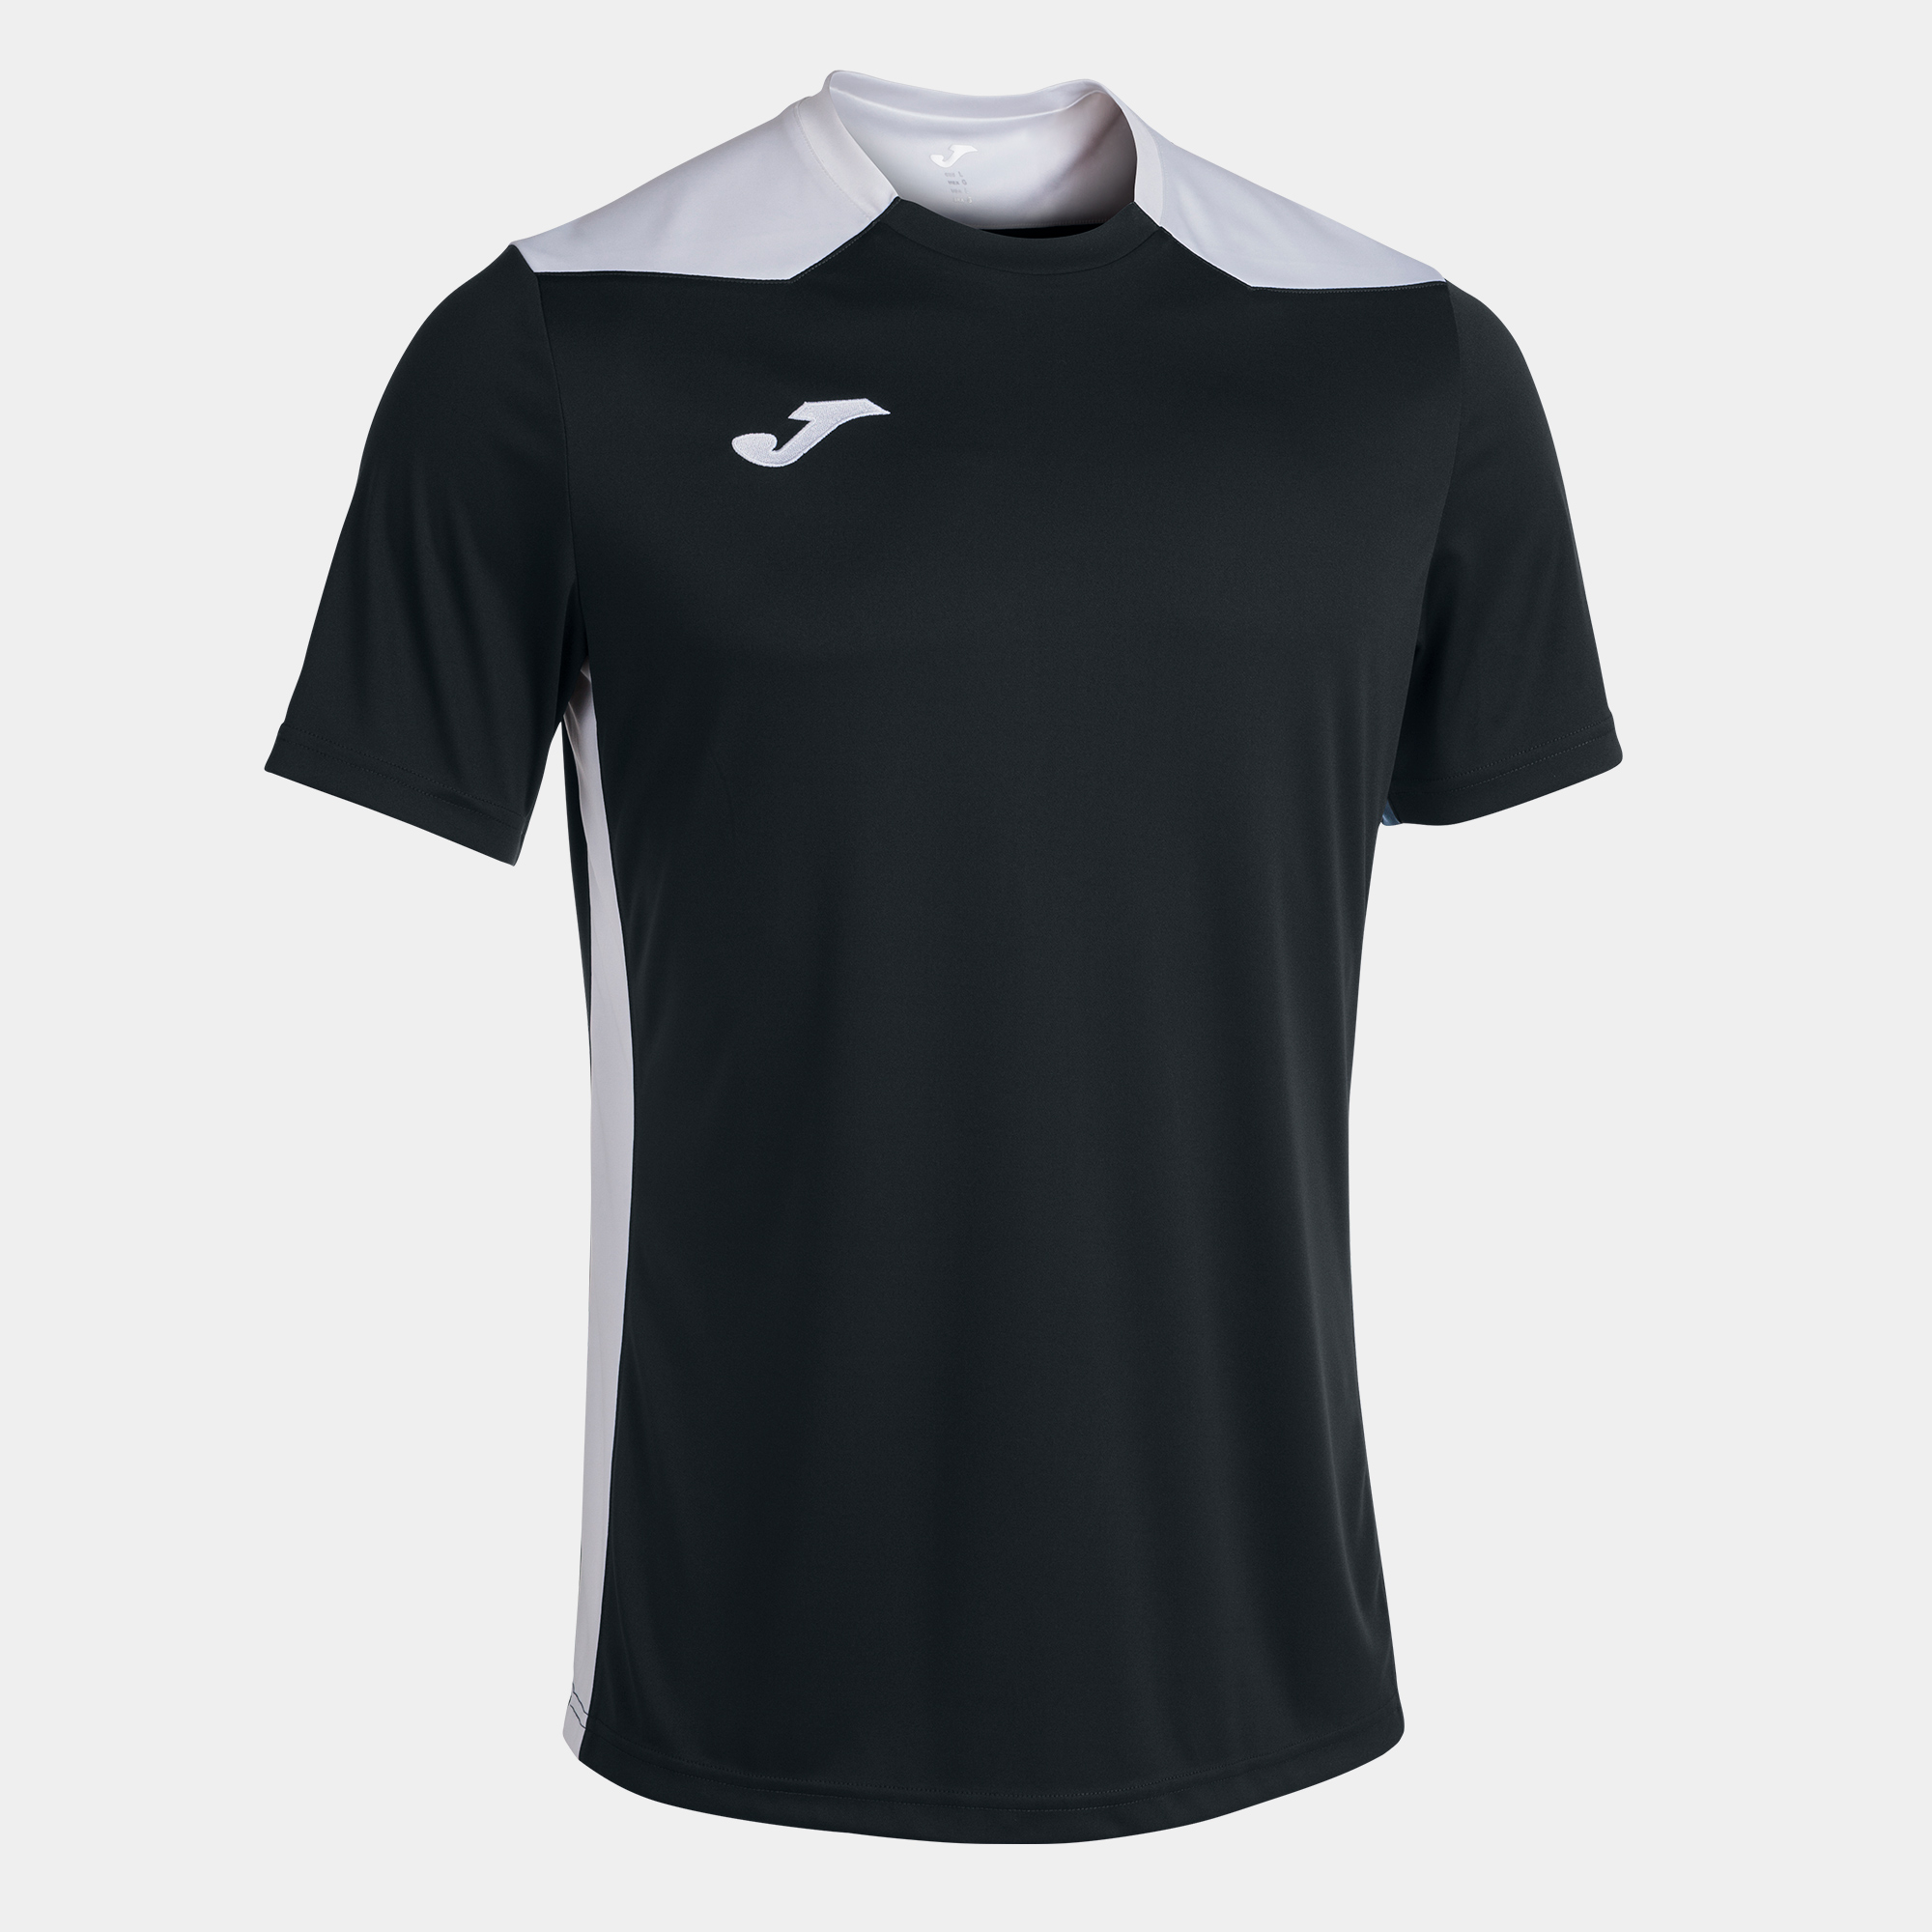 Rugby Hockey or any Team Sport JOMA SPORT Unisex Short Sleeve Top CHAMPION VI Suitable for Football Futsal